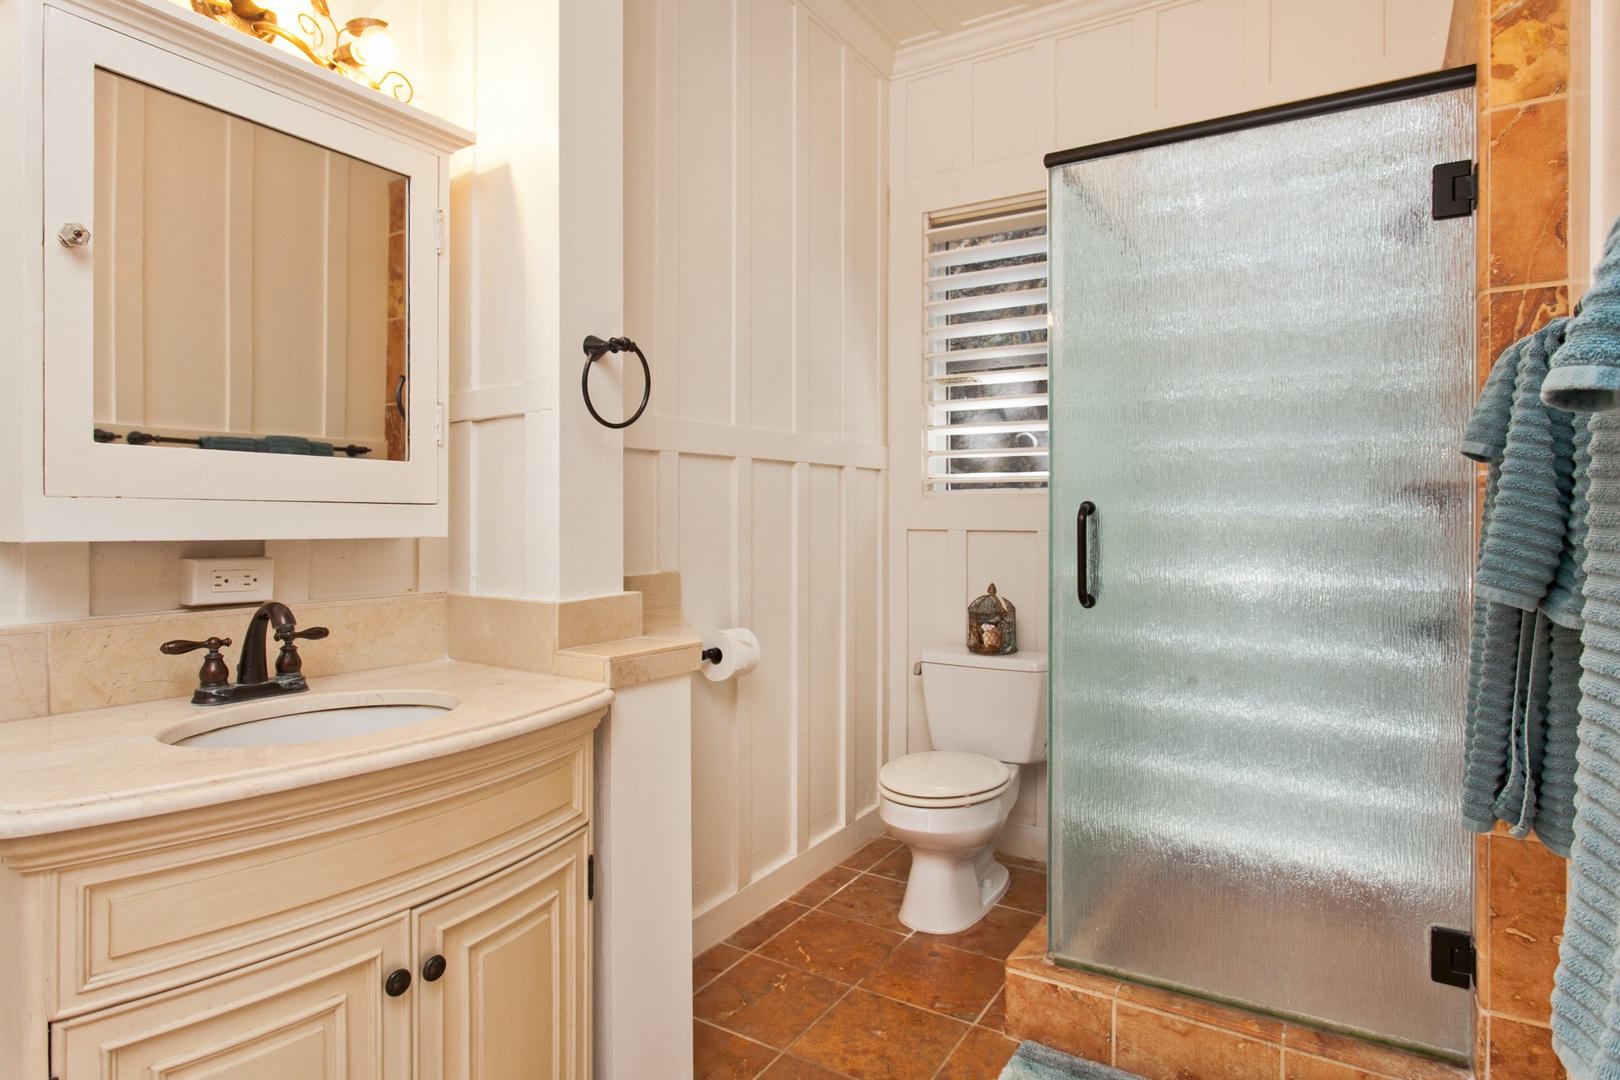 Kailua Vacation Rentals, Hale Mahina Lanikai* - Full bathroom with a walk-in shower.